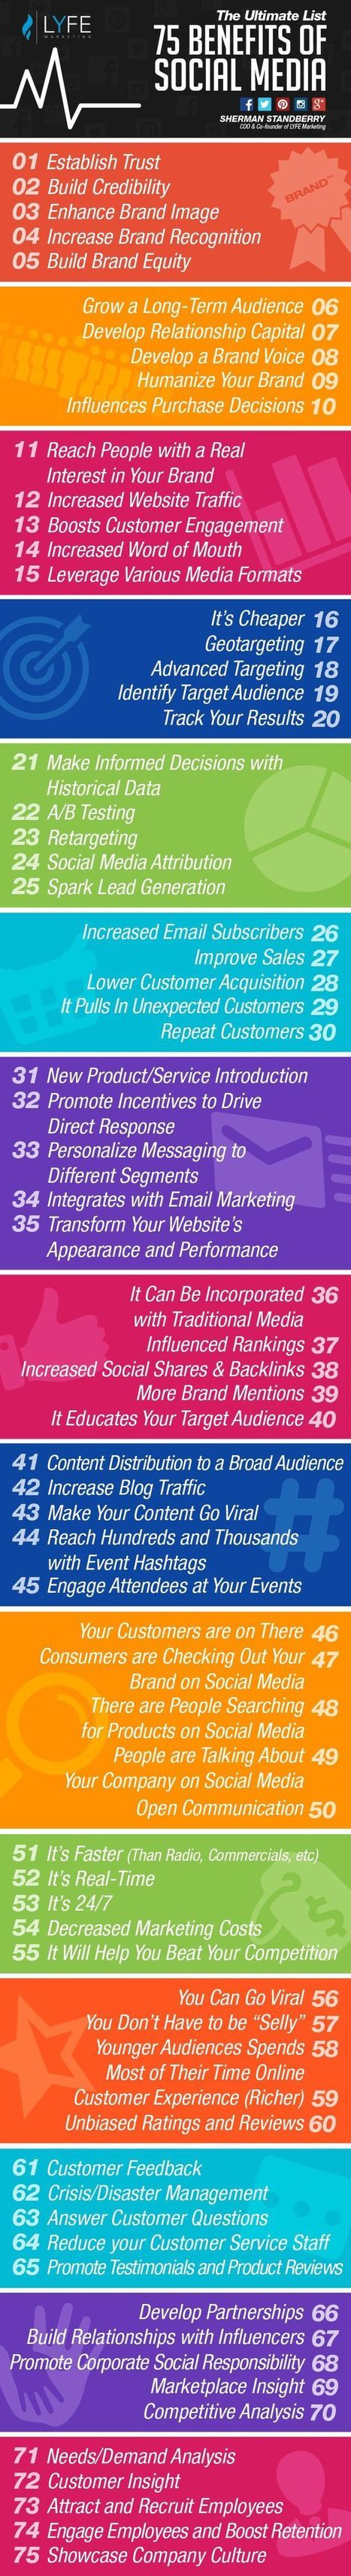 75 Benefits of Social Marketing | Public Relations & Social Marketing Insight | Scoop.it